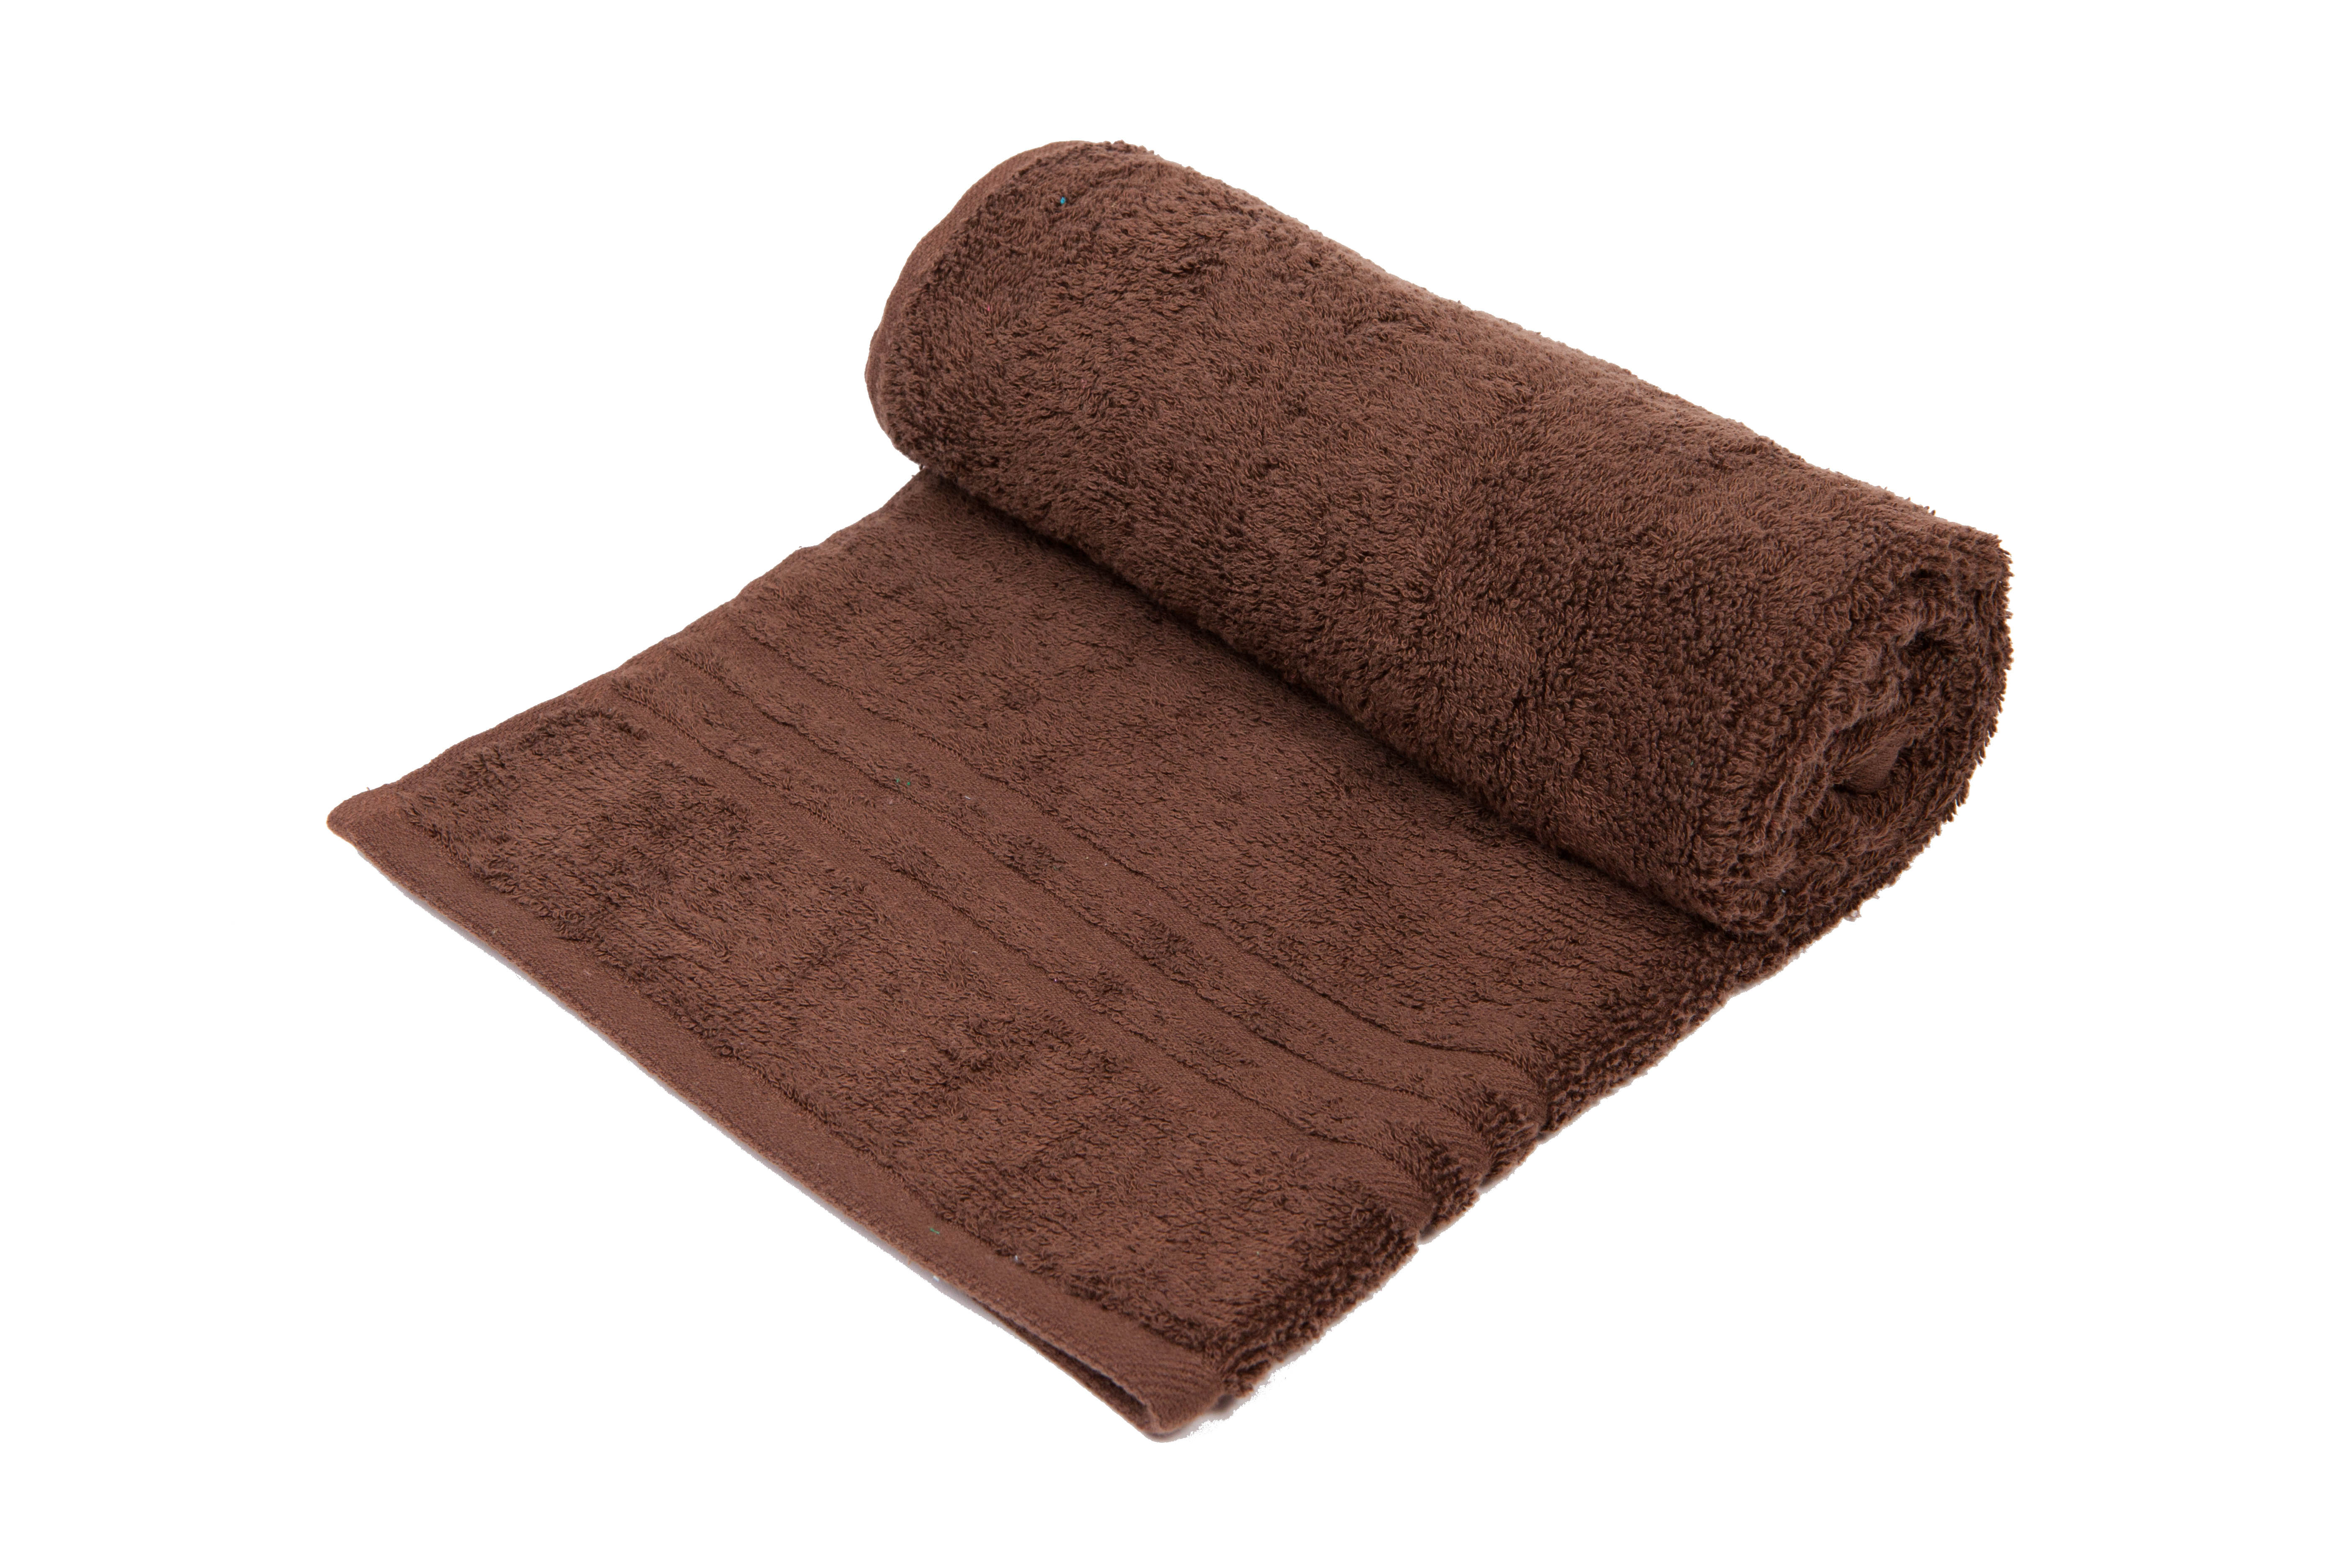 Коричневое полотенце. Полотенце Индия 70х140. Банное полотенце. Полотенце махровое.